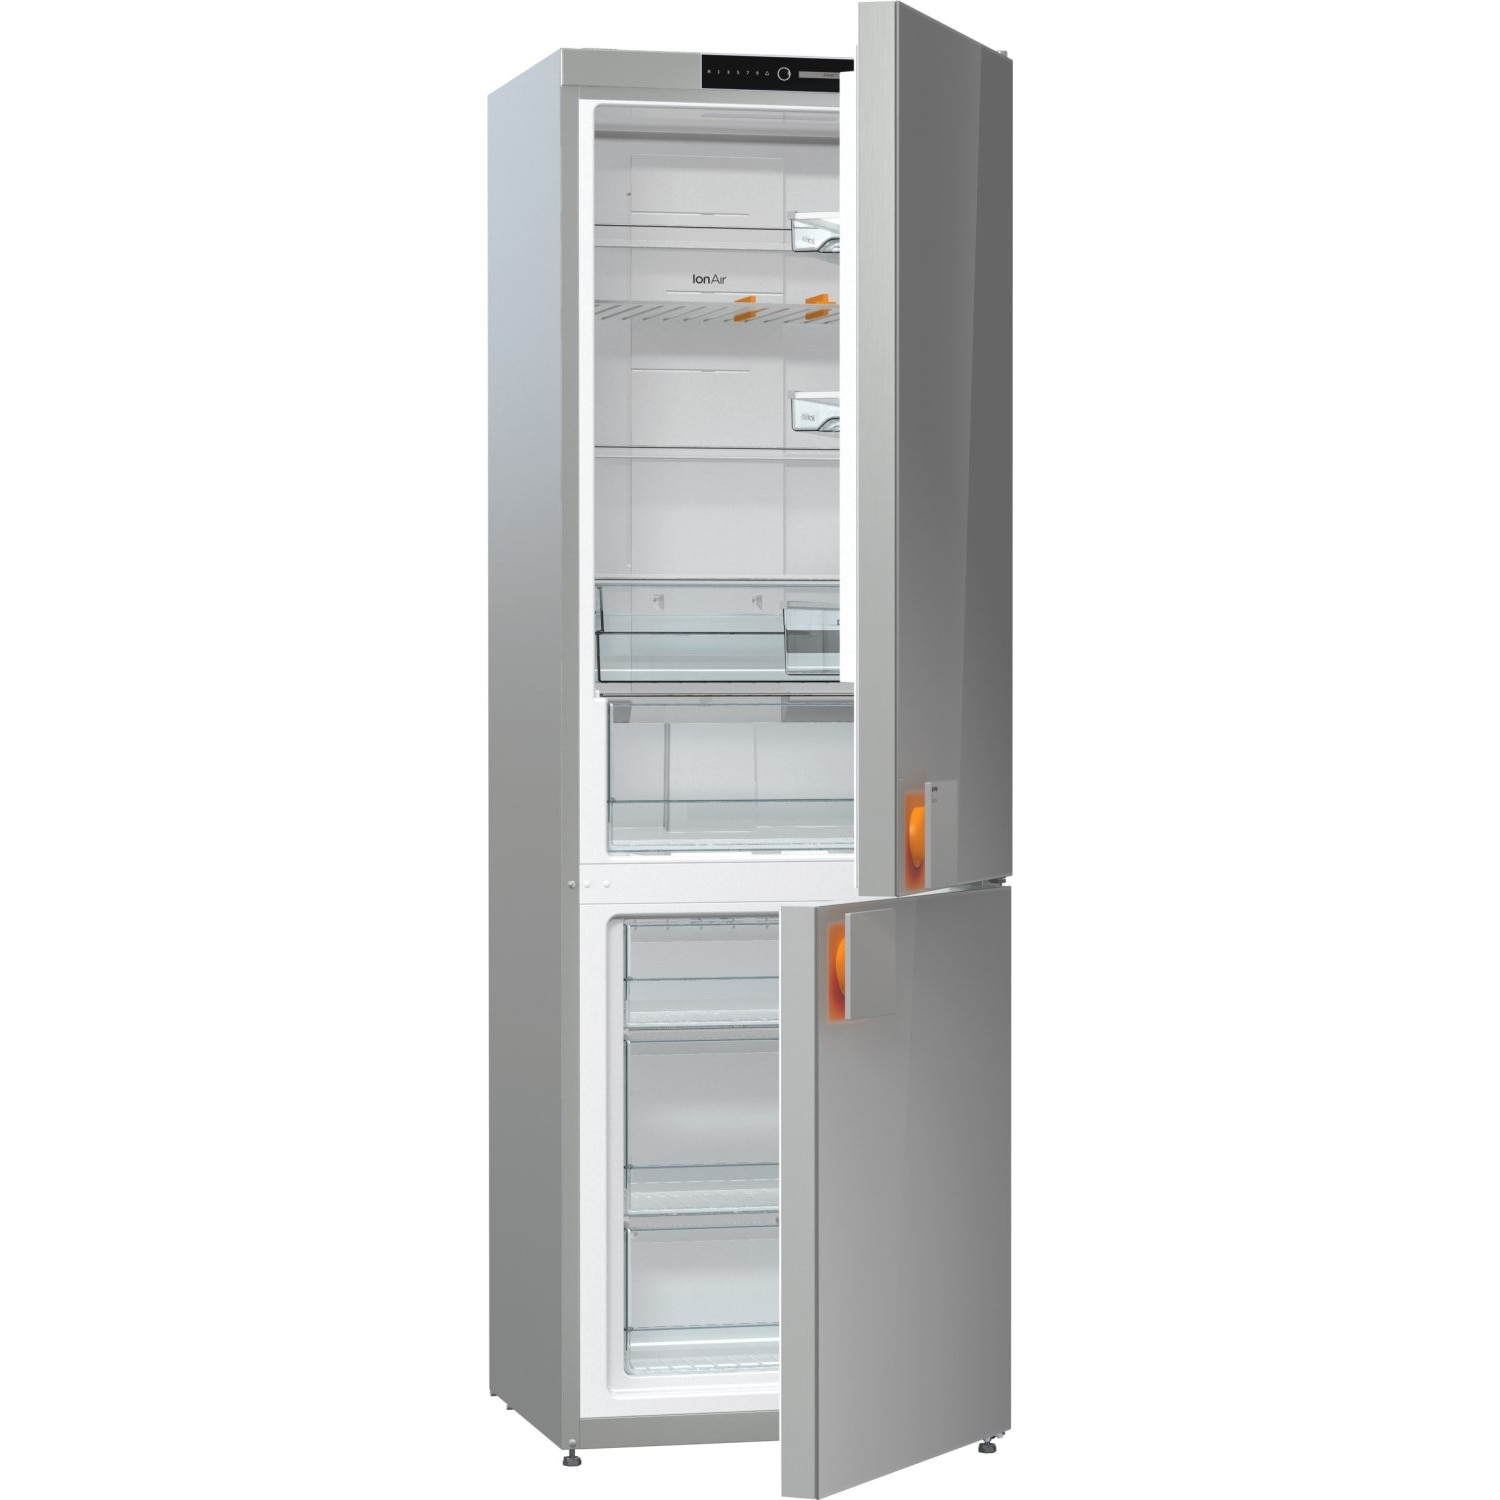 Хладилник Gorenje NRK612ST с обем от 307 л.